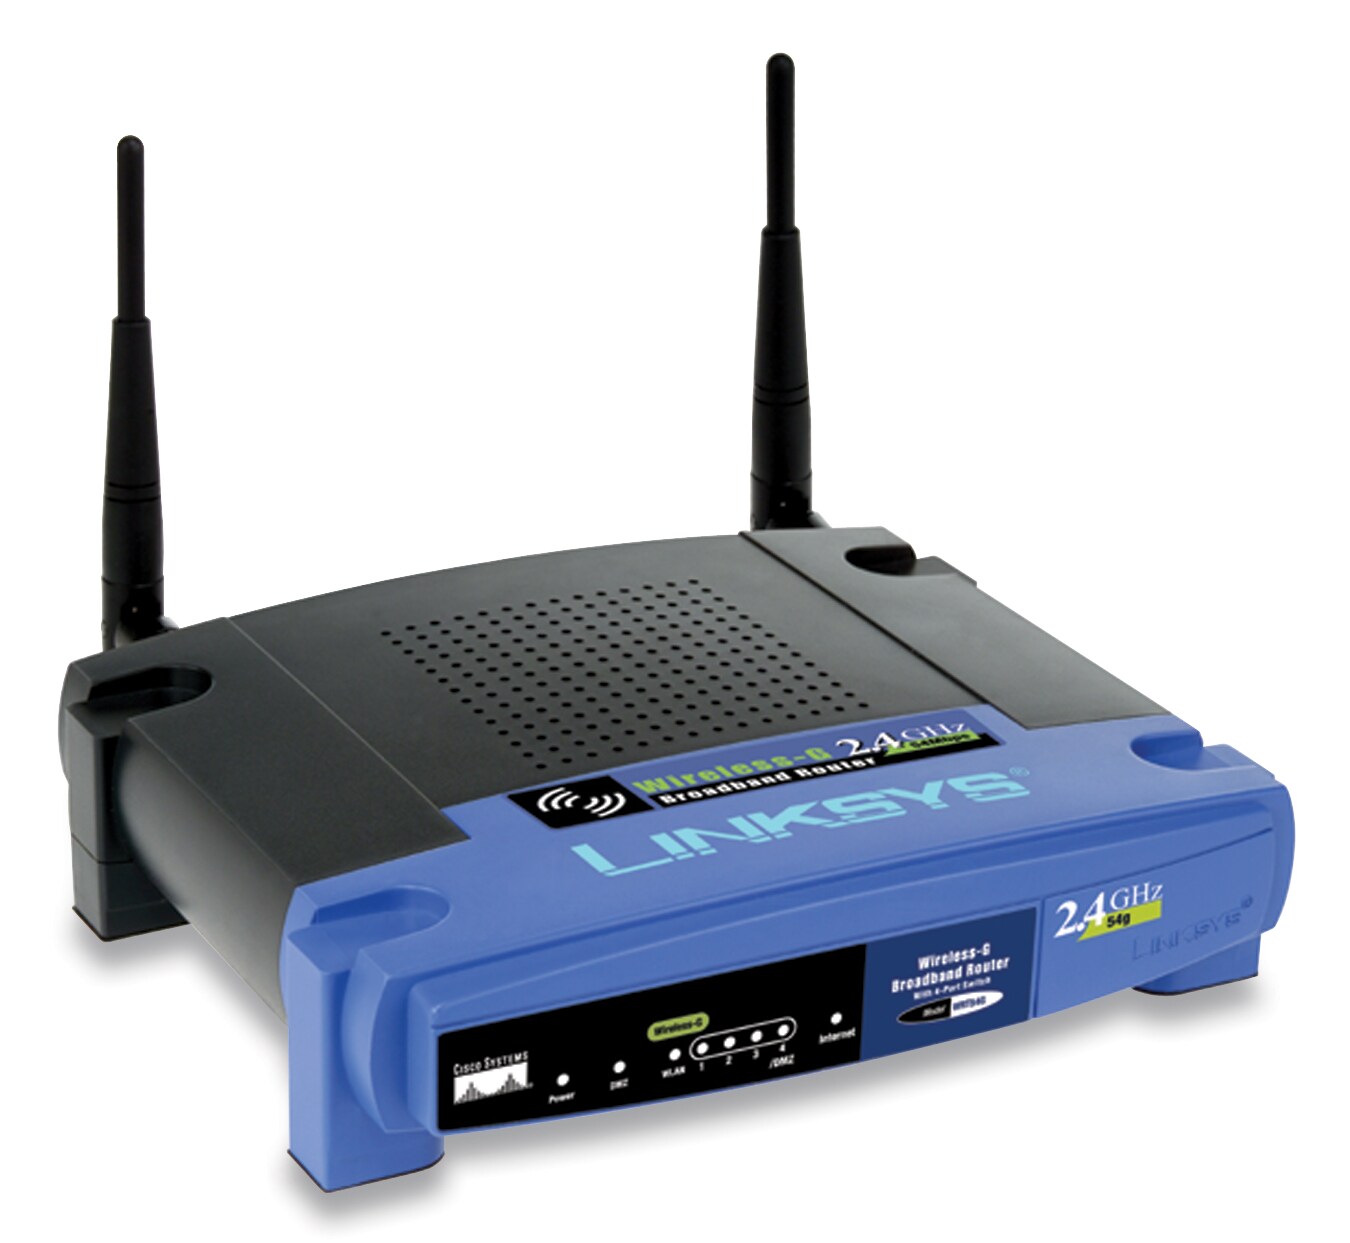 Linksys Wireless-G Broadband Router with SpeedBooster					
